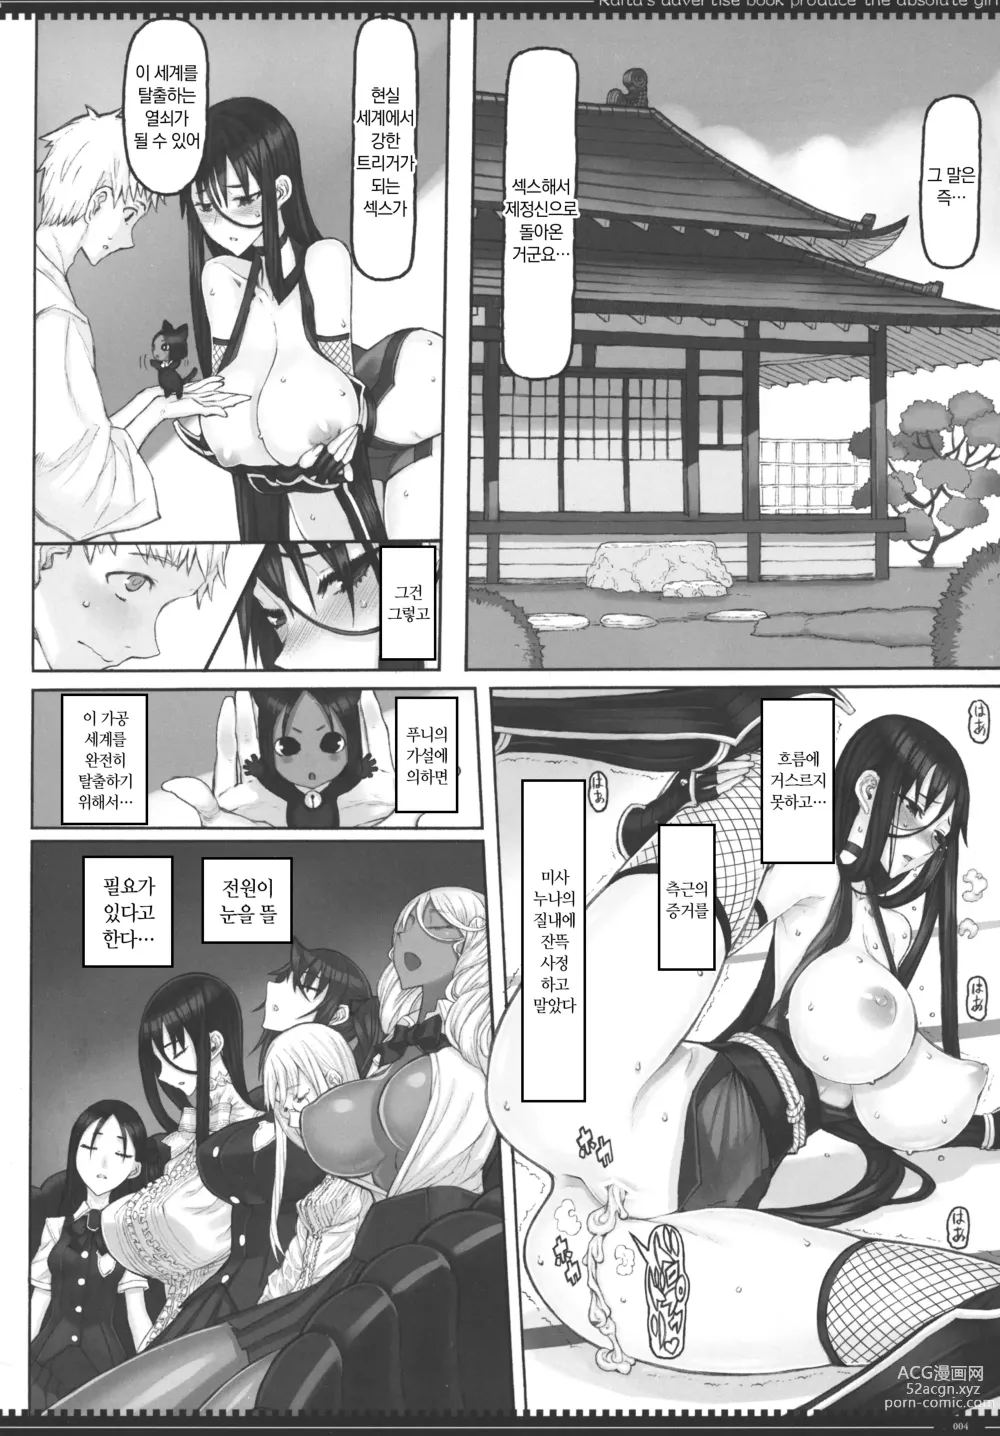 Page 3 of doujinshi 마법소녀 22.0 + C101 회장 한정본